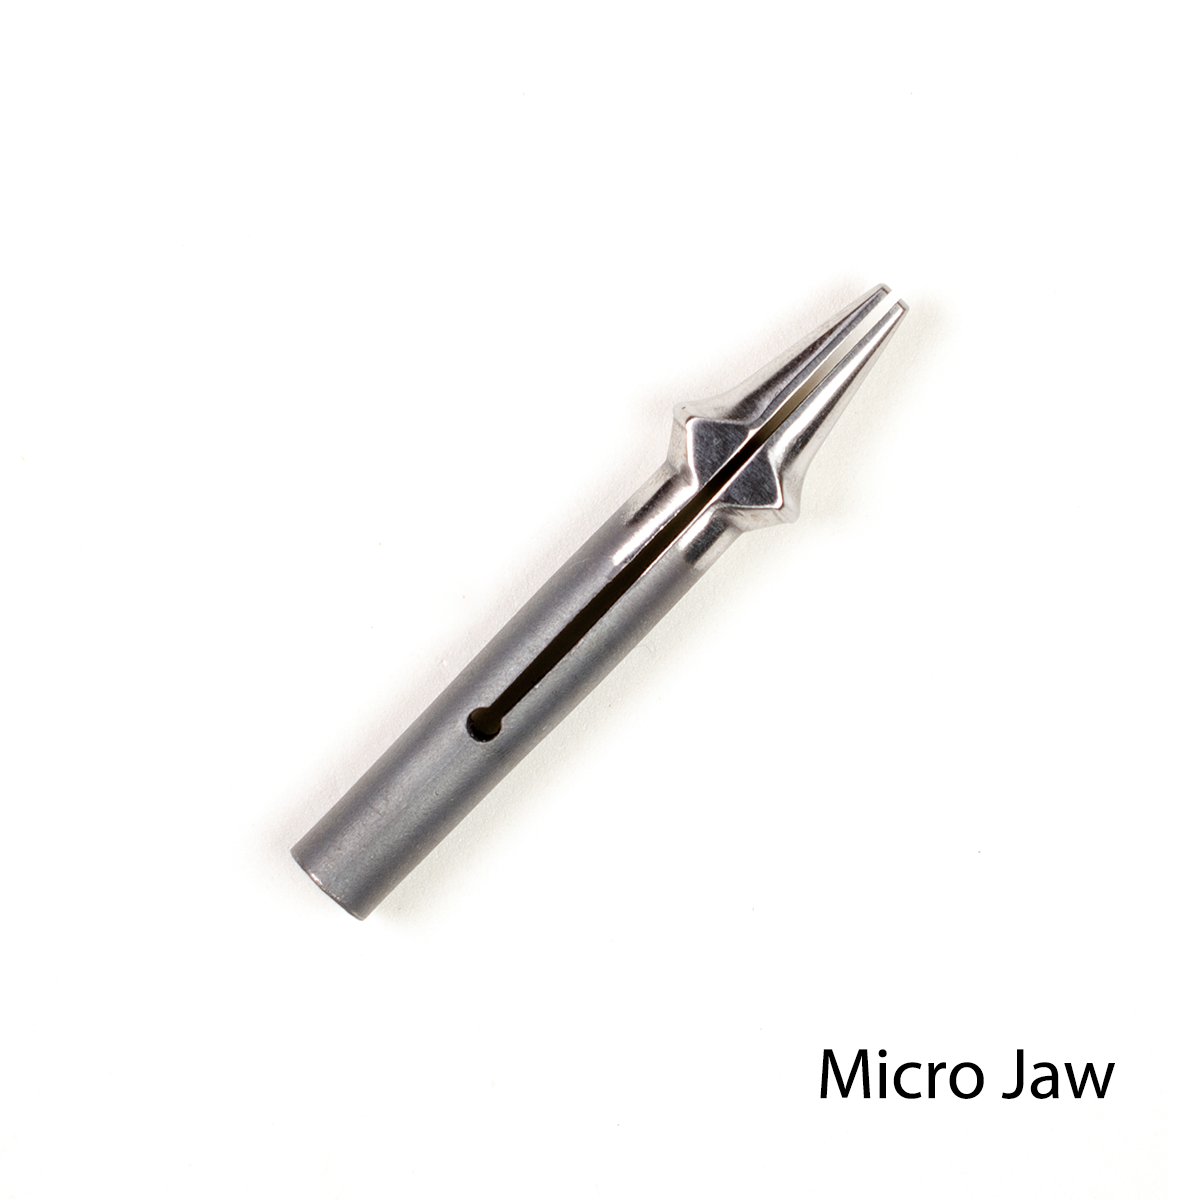 HMH Interchangeable Micro Jaw